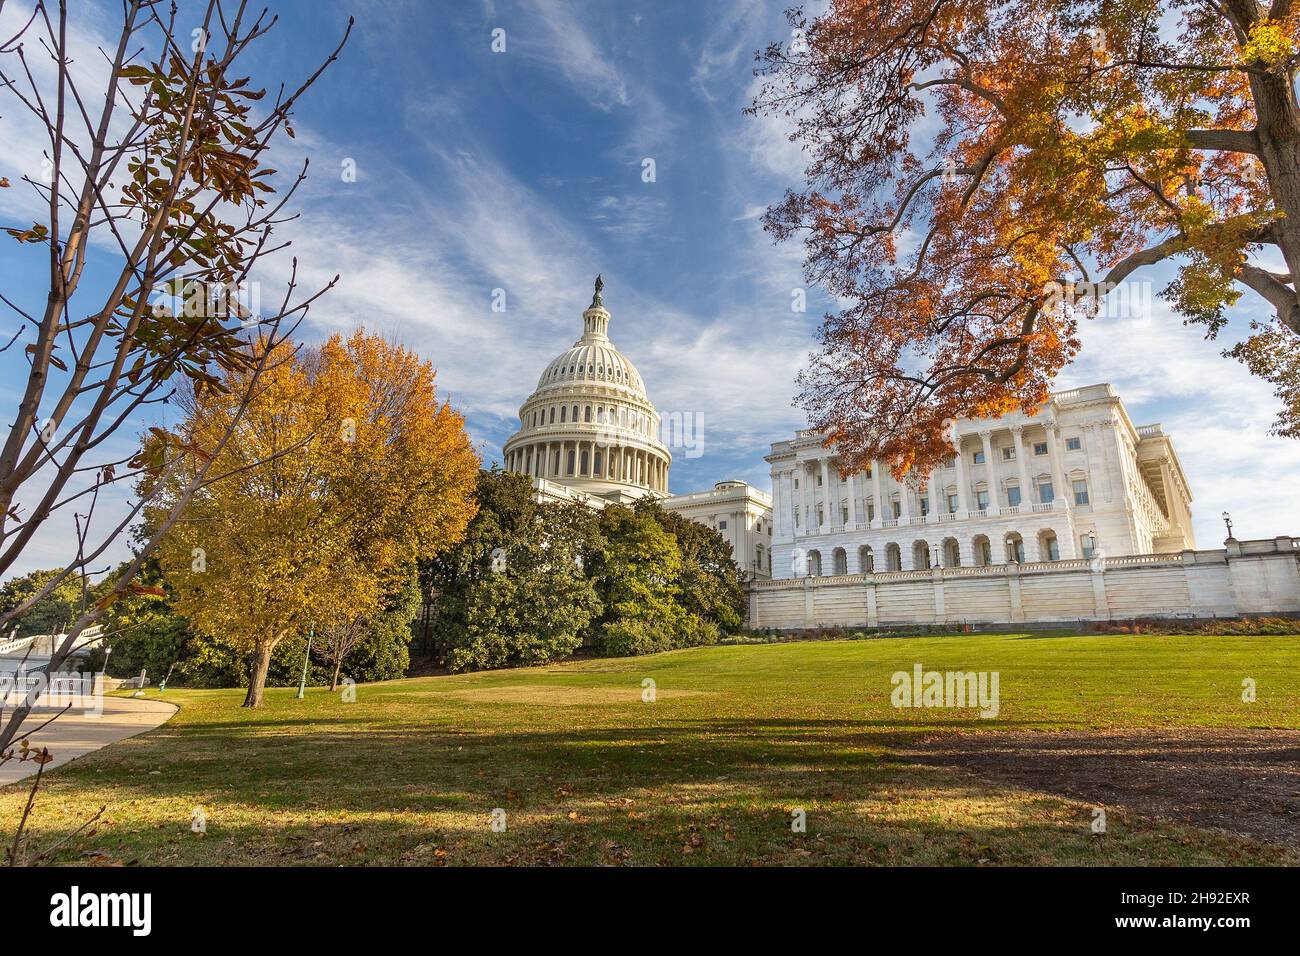 CAPITOL HILL, WASHINGTON, D.C. - NOVEMBER 21: The United States Capitol Building on November 21, 2021 in Capitol Hill, Washington, D.C. Stock Photo